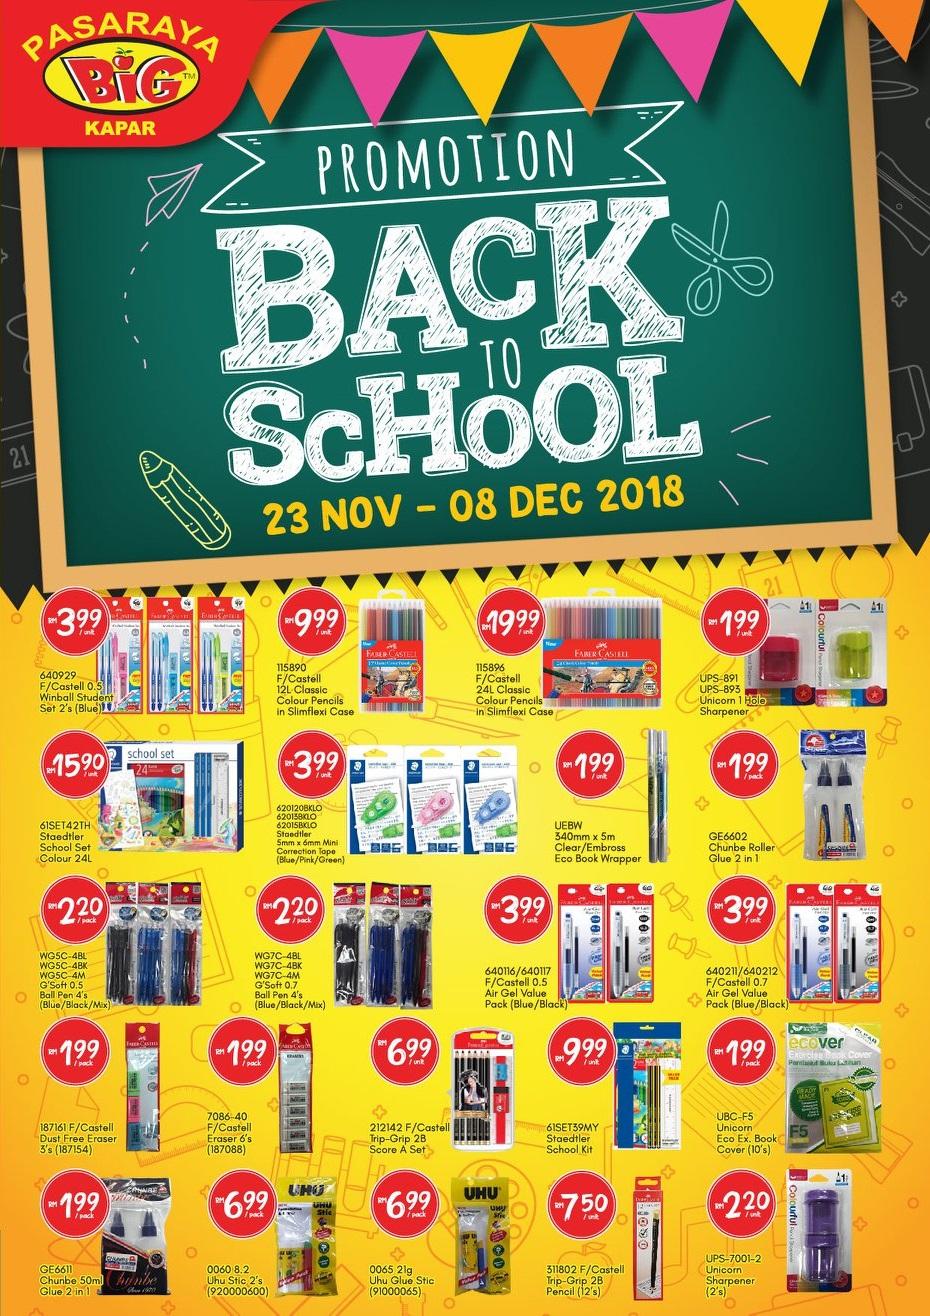 Pasaraya BiG Kapar Back to School Promotion (23 November 2018 - 8 December 2018)